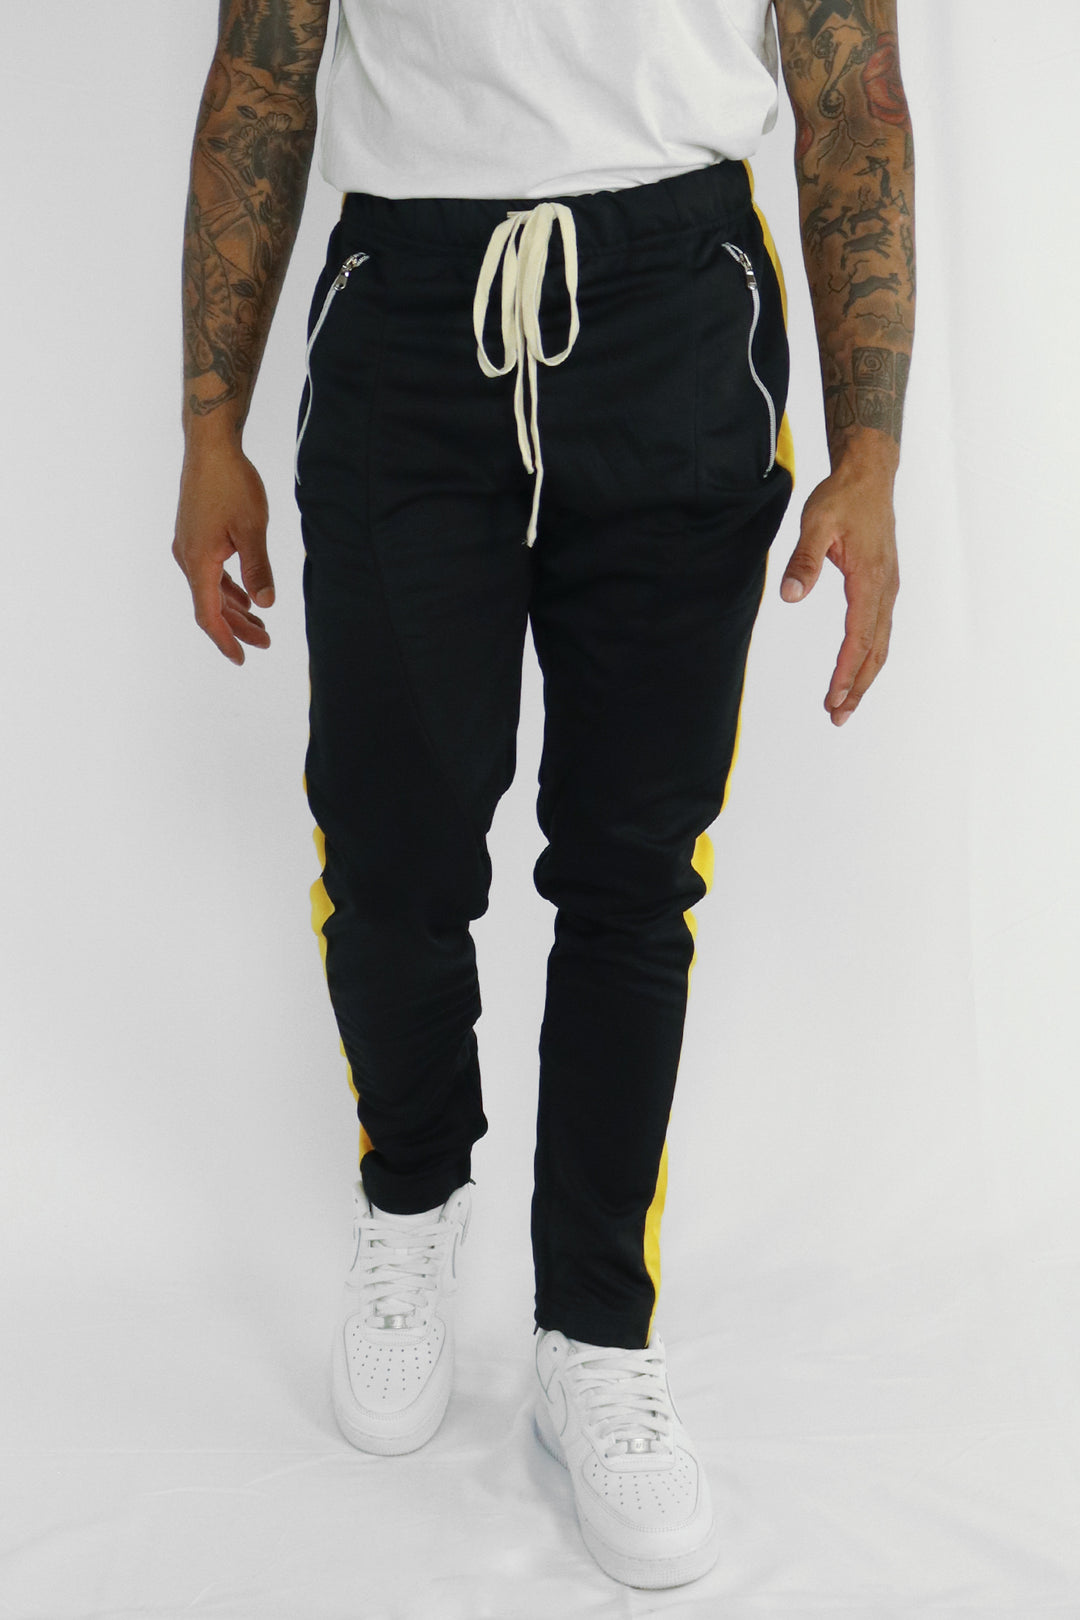 Premium Side Stripe Zip Pocket Track Pants (Black-Yellow) - Zamage